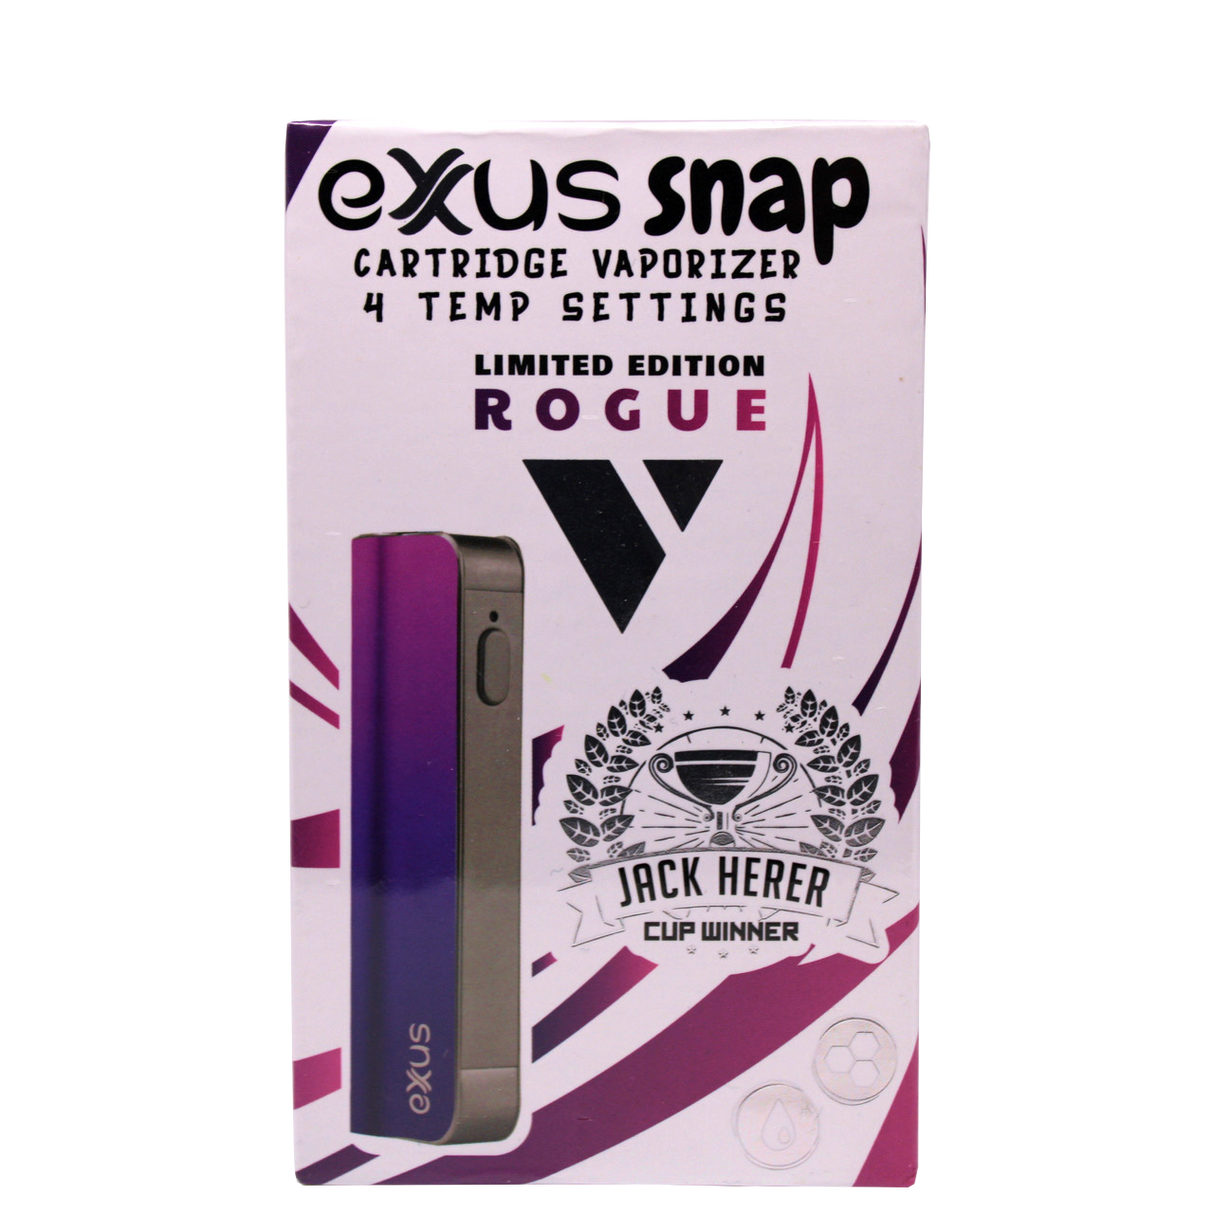 Exxus - Snap Cartridge Vaporizer 4 Temp Settings